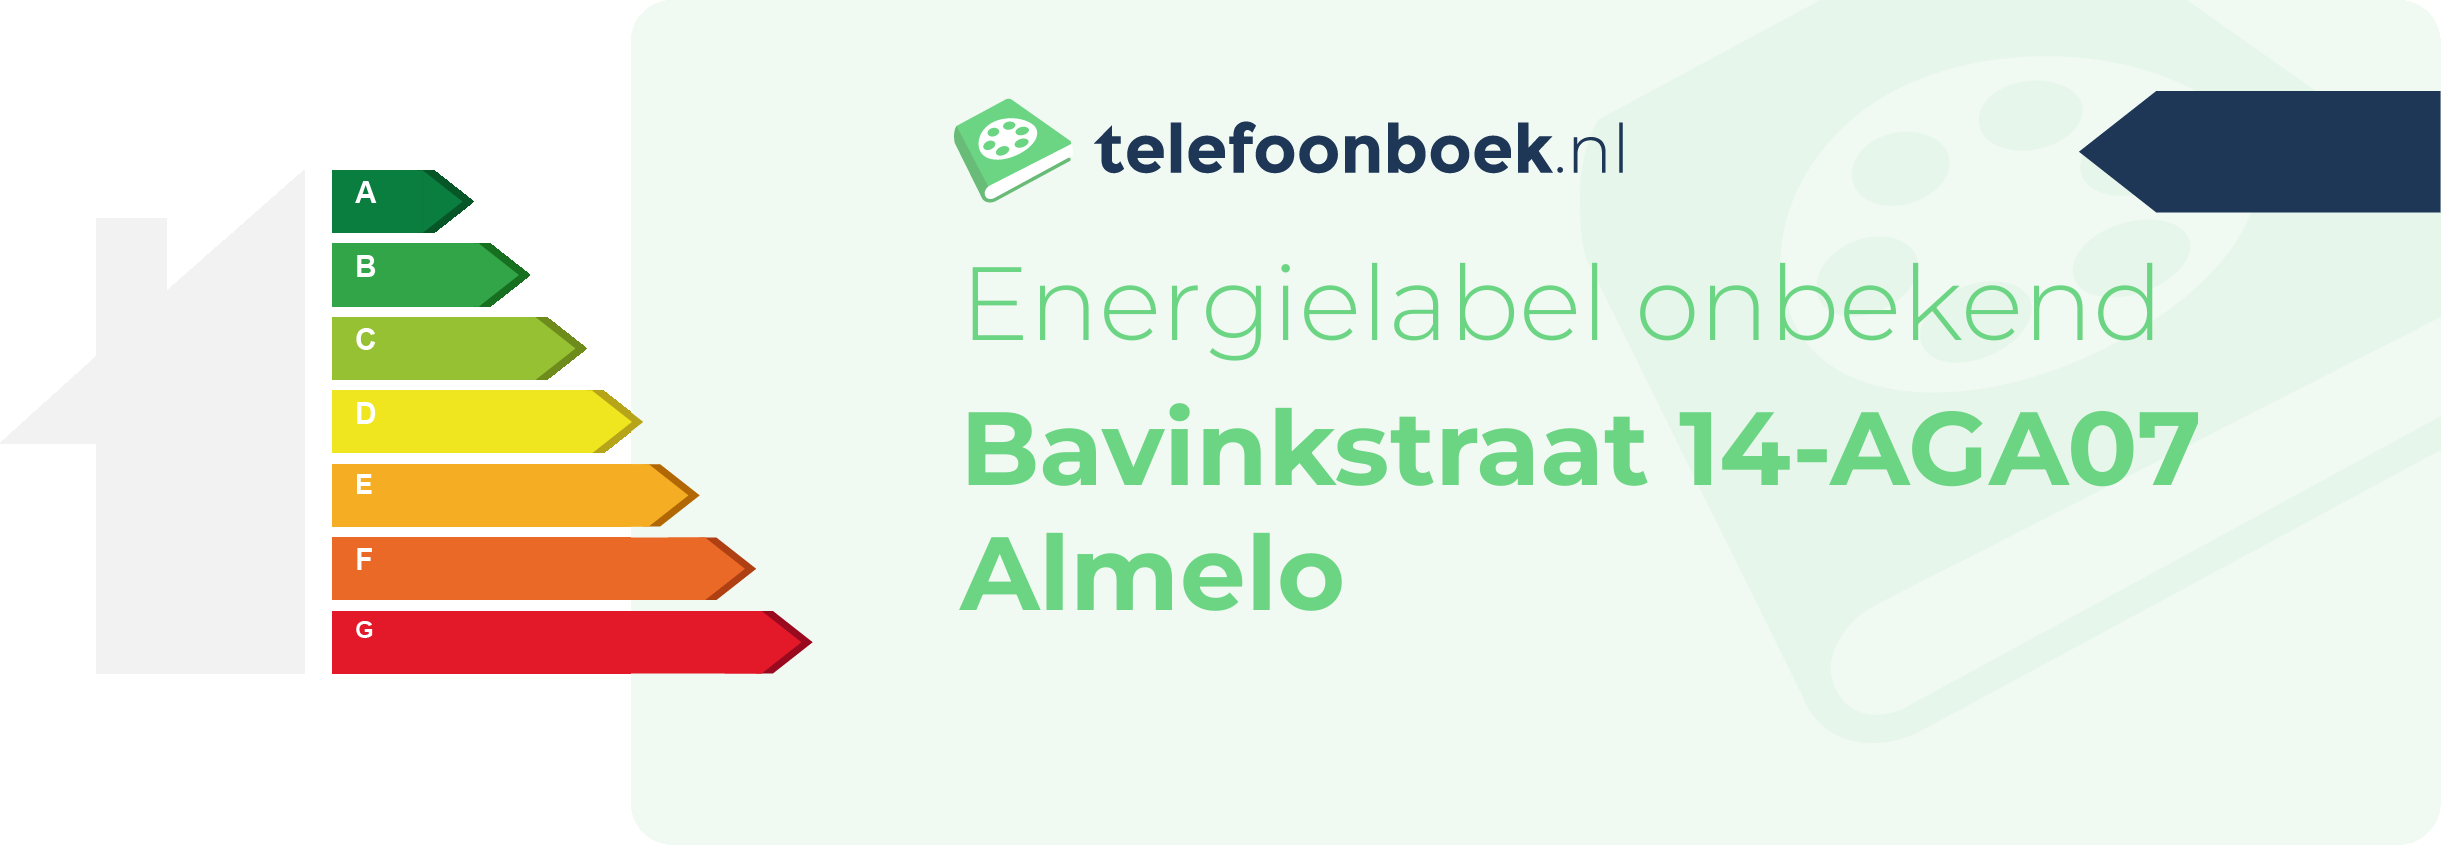 Energielabel Bavinkstraat 14-AGA07 Almelo